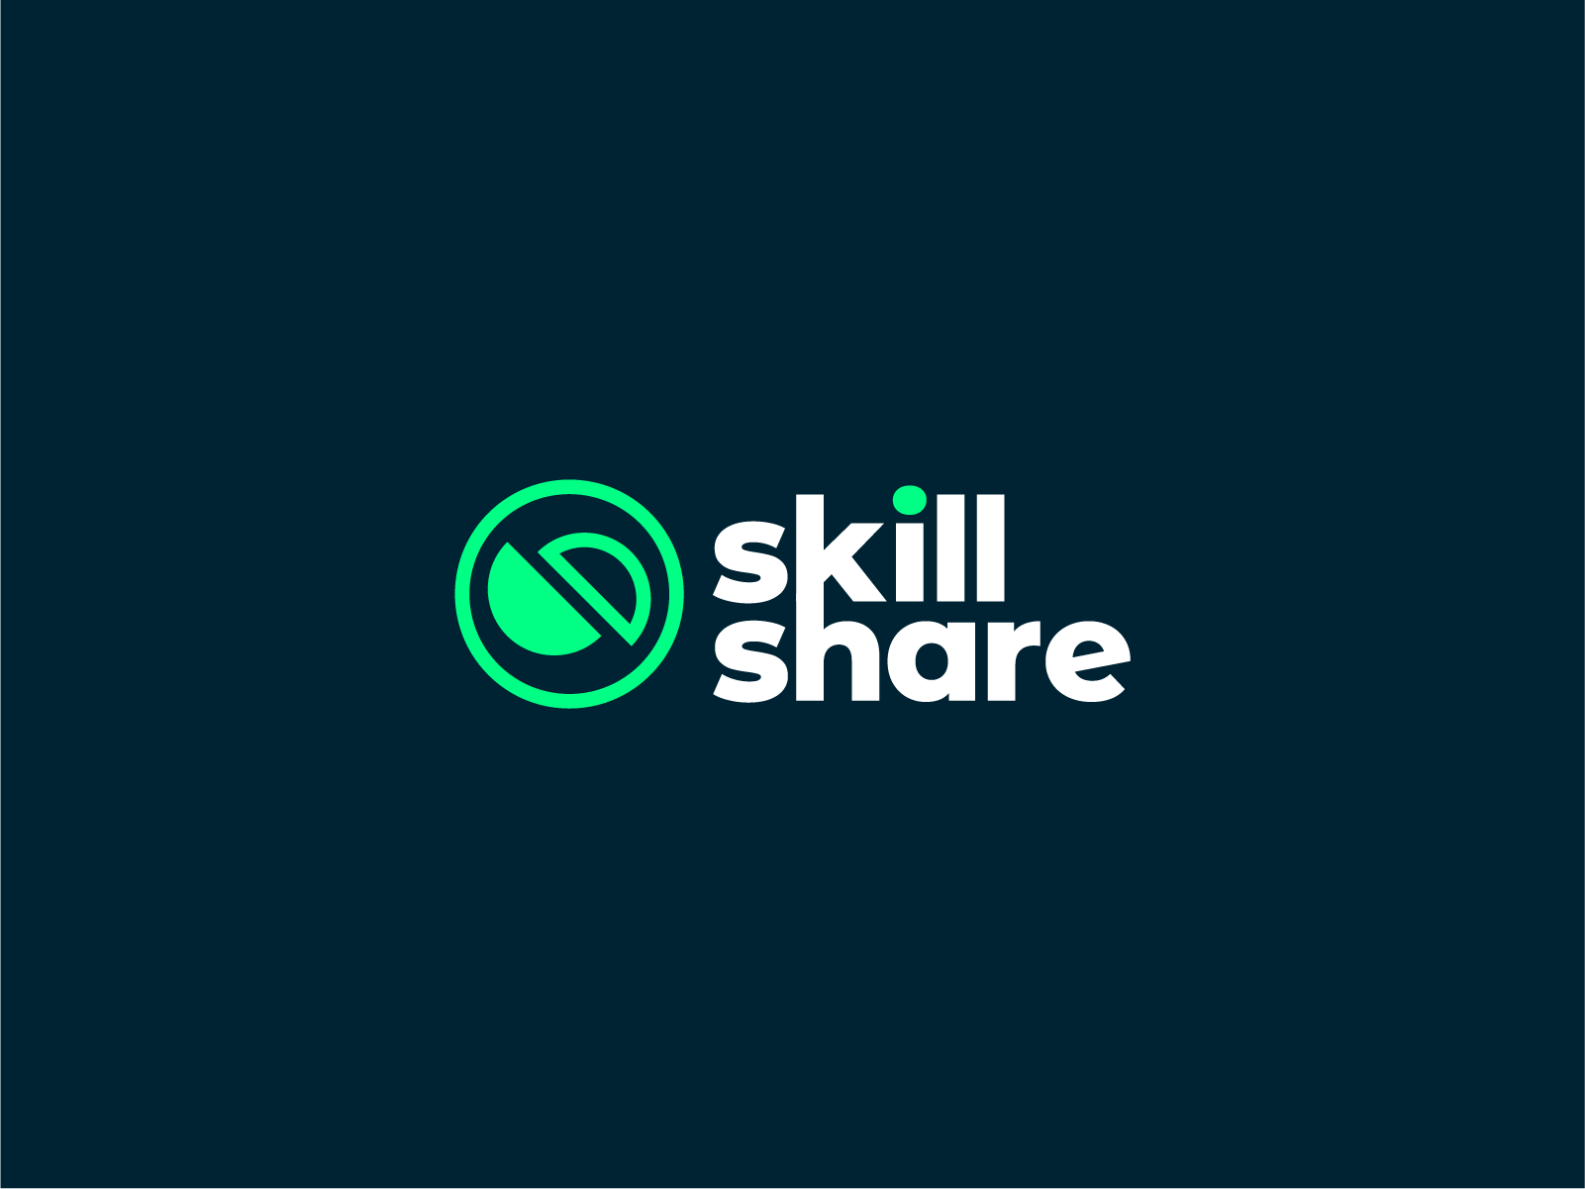 Skillshare - Logo Proposal by Ethan Suero on Dribbble